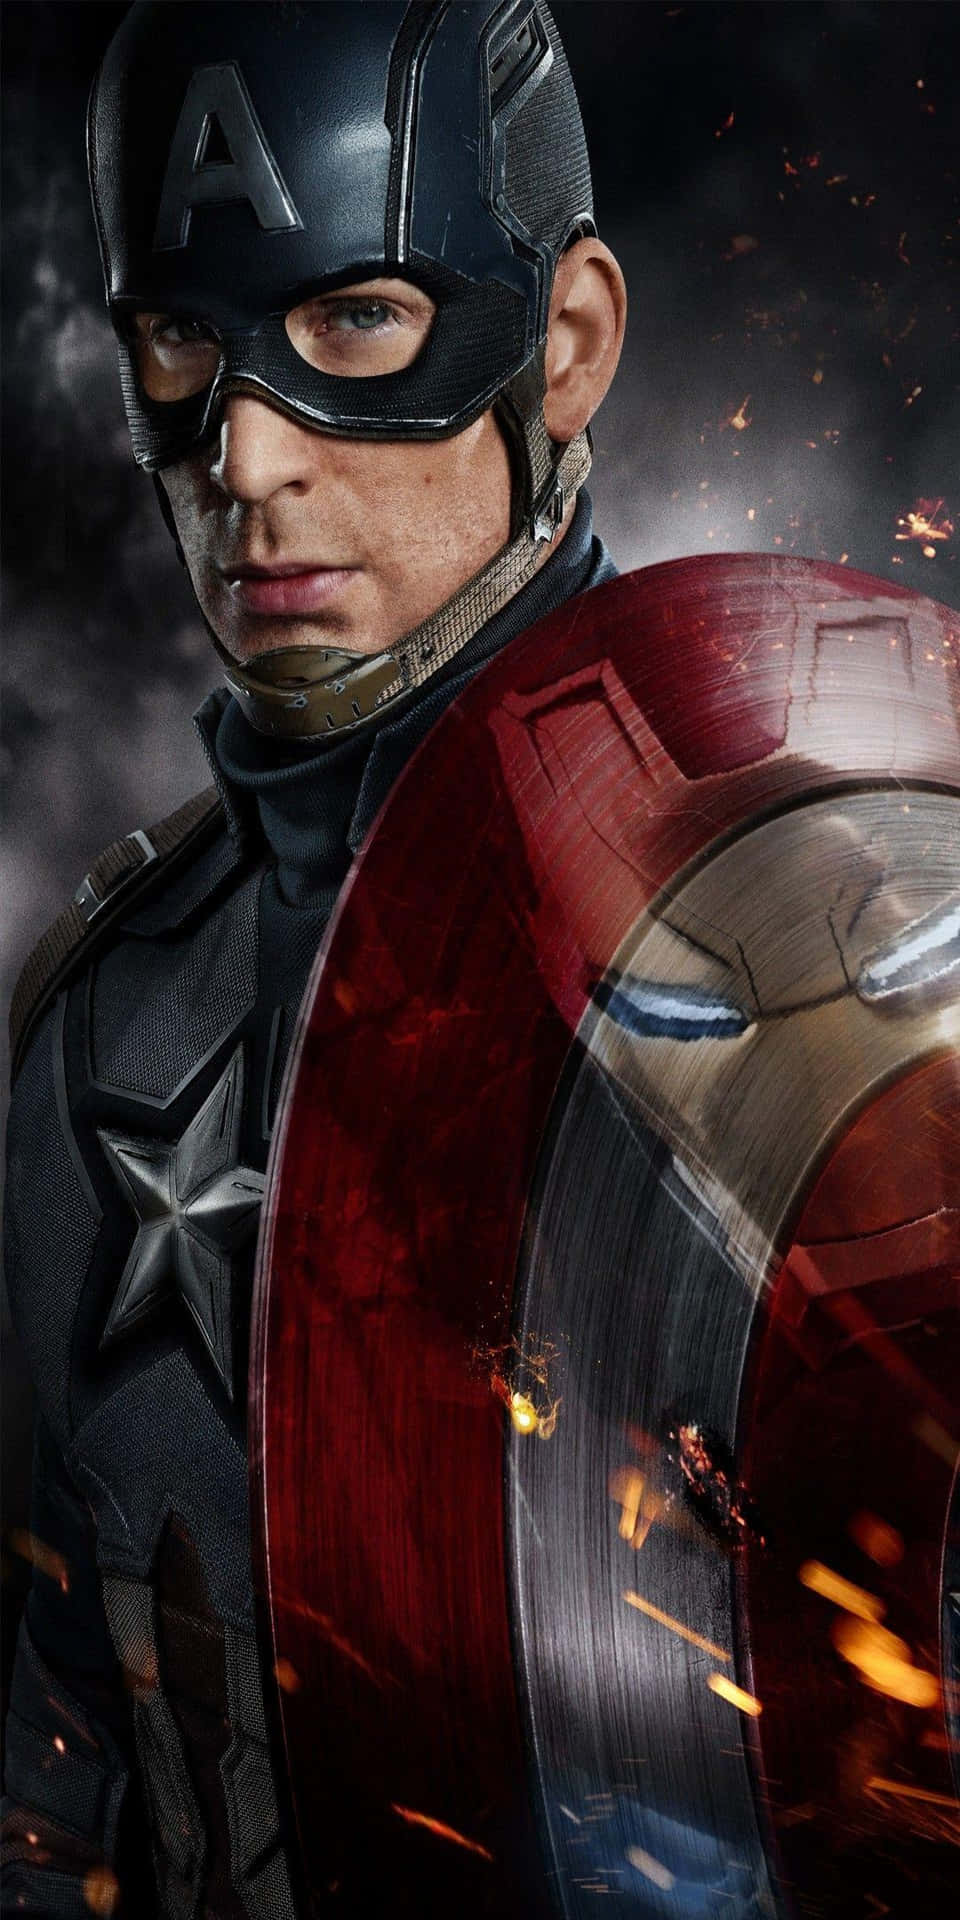 Pixel3 Bakgrund Med Captain America Superhjälte.